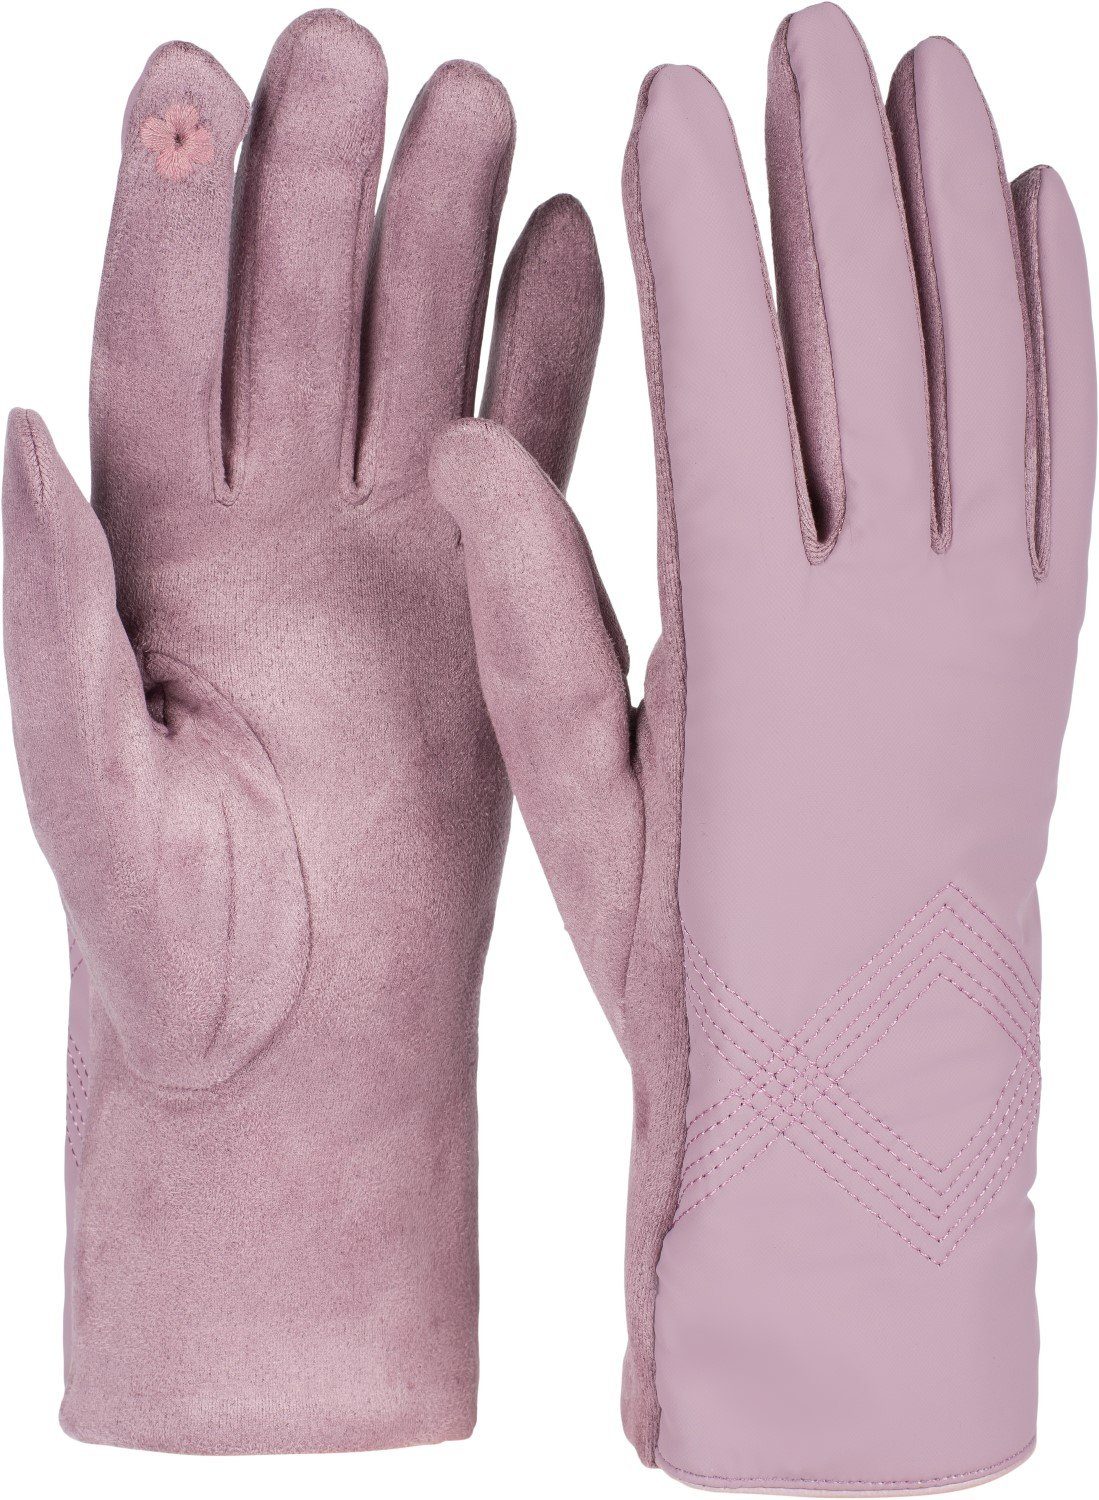 styleBREAKER Fleecehandschuhe Zick-Zack Touchscreen Mauve Handschuhe bestickt